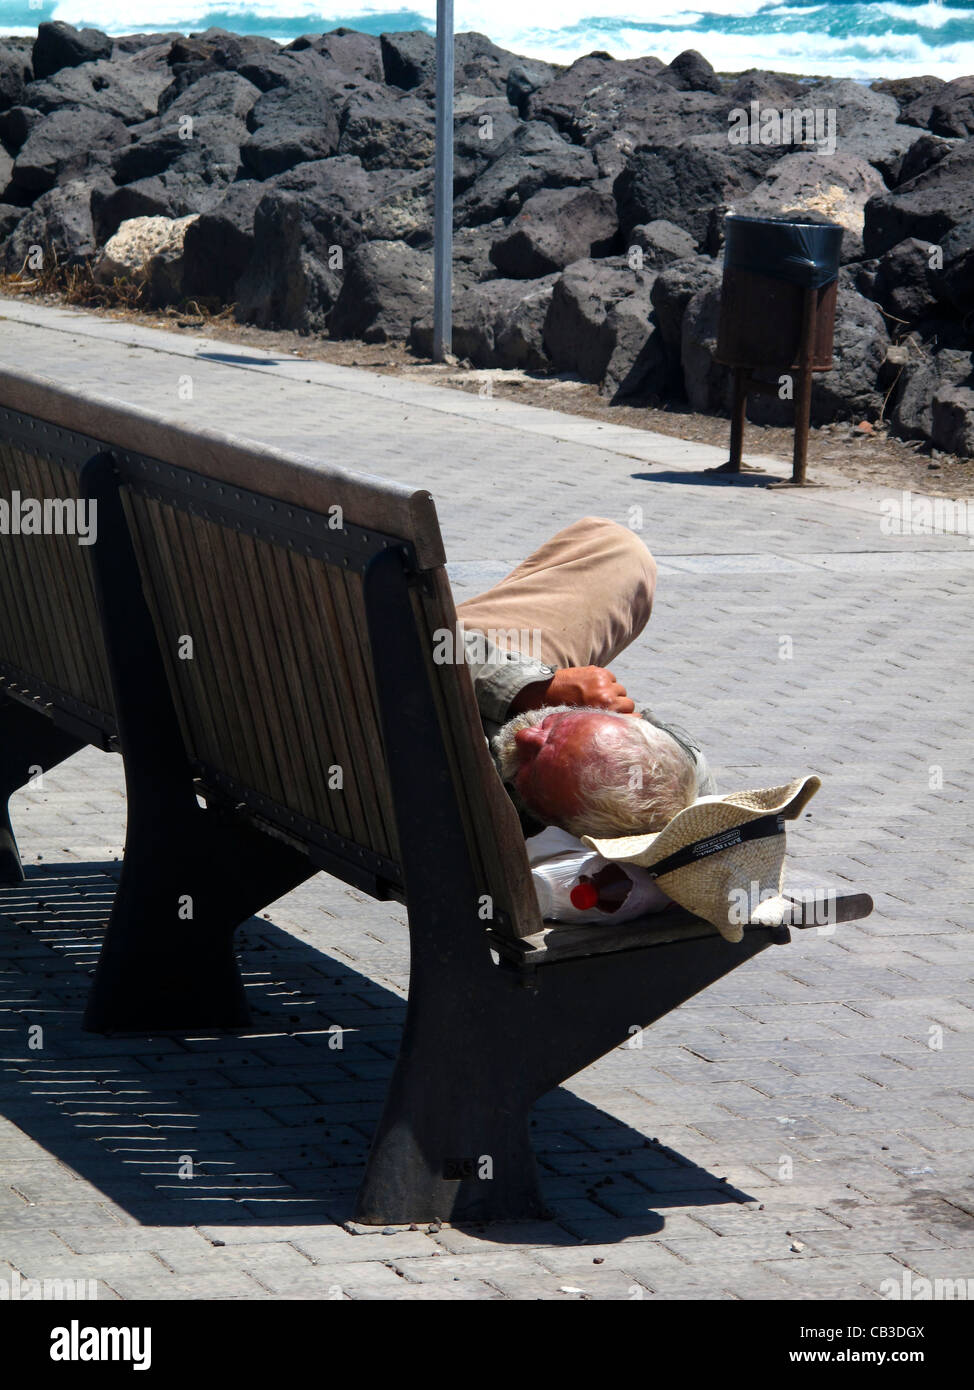 Tramp sleeping on wooden bench in sunshine Stock Photo